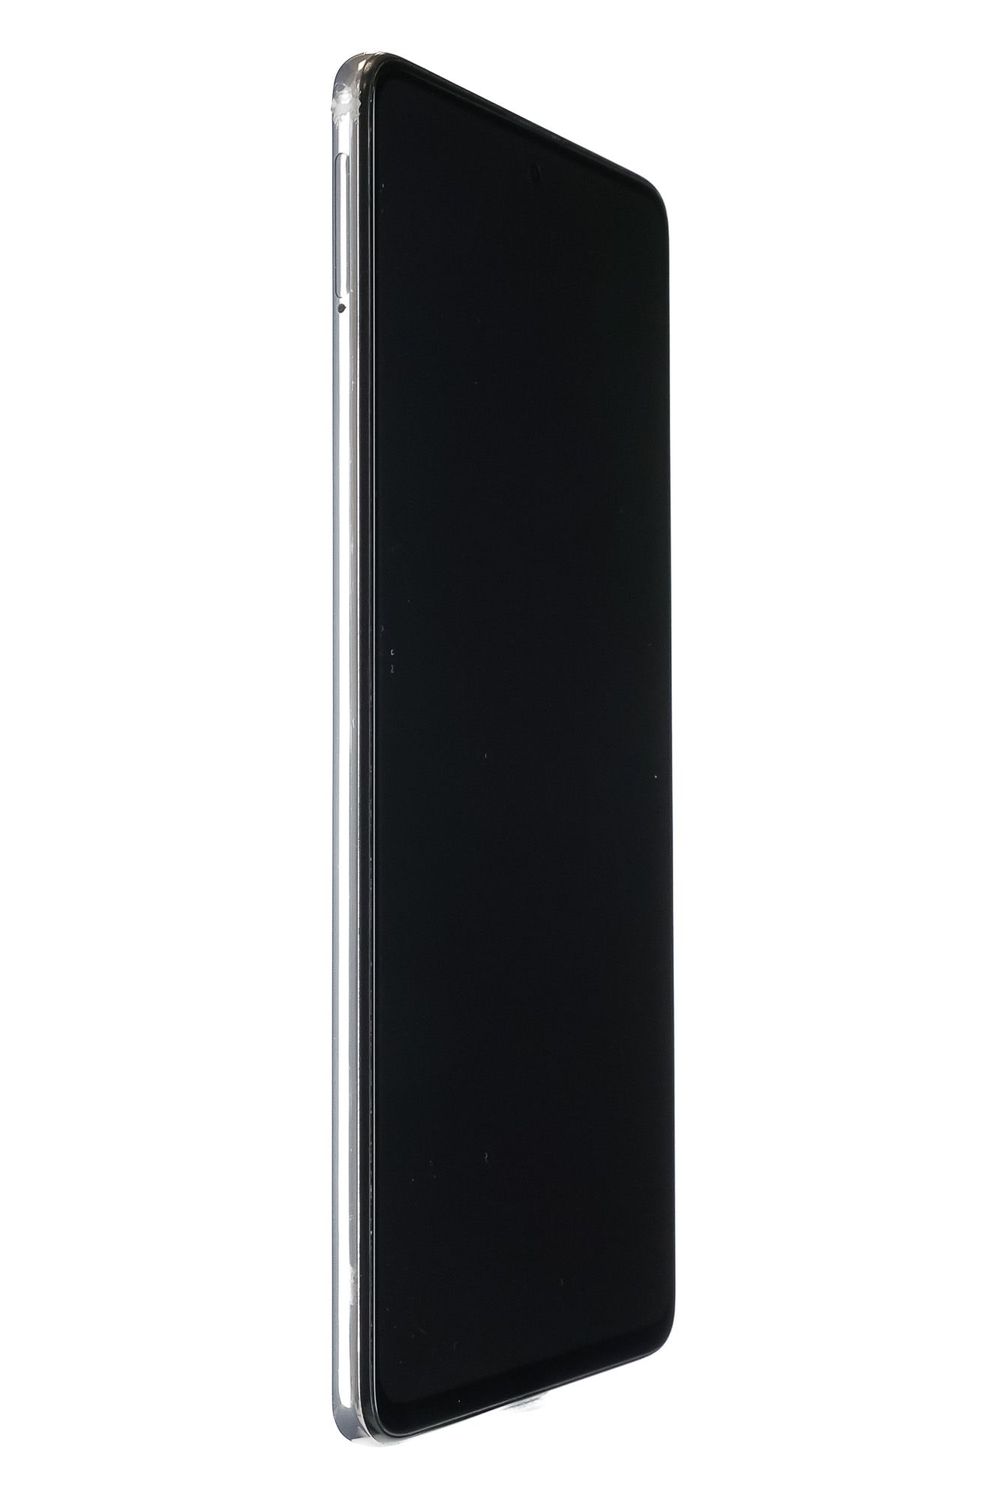 Telefon mobil Samsung Galaxy A51 Dual Sim, White, 64 GB, Bun